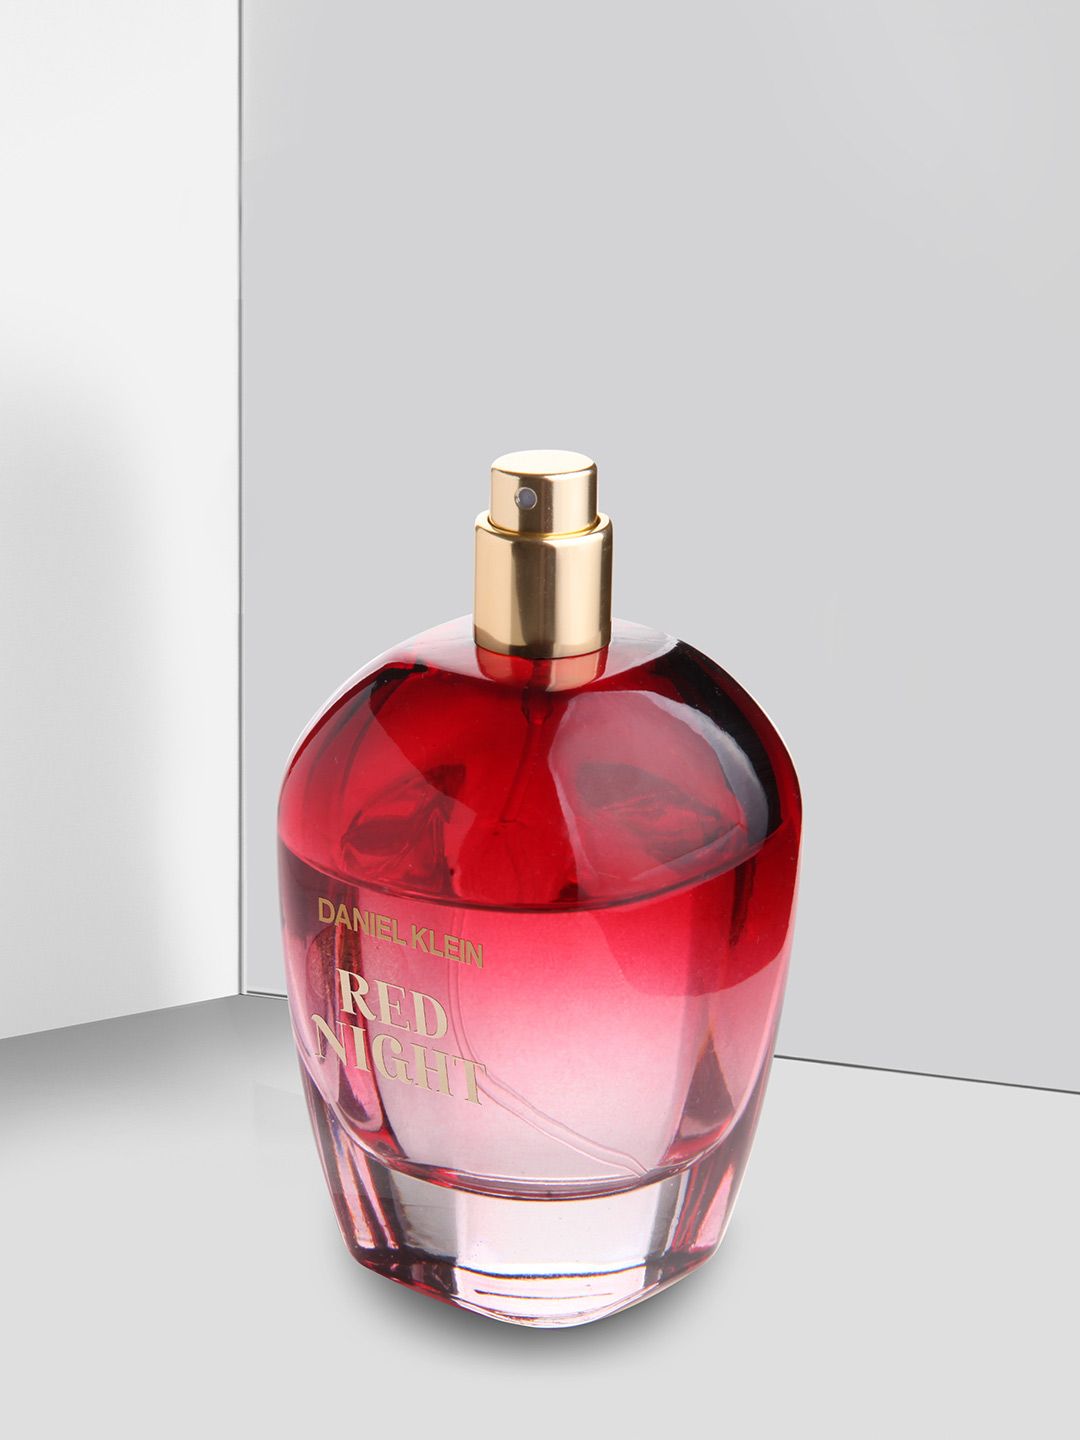 Daniel Klein Women Red Night Eau de Parfum - 100ml Price in India